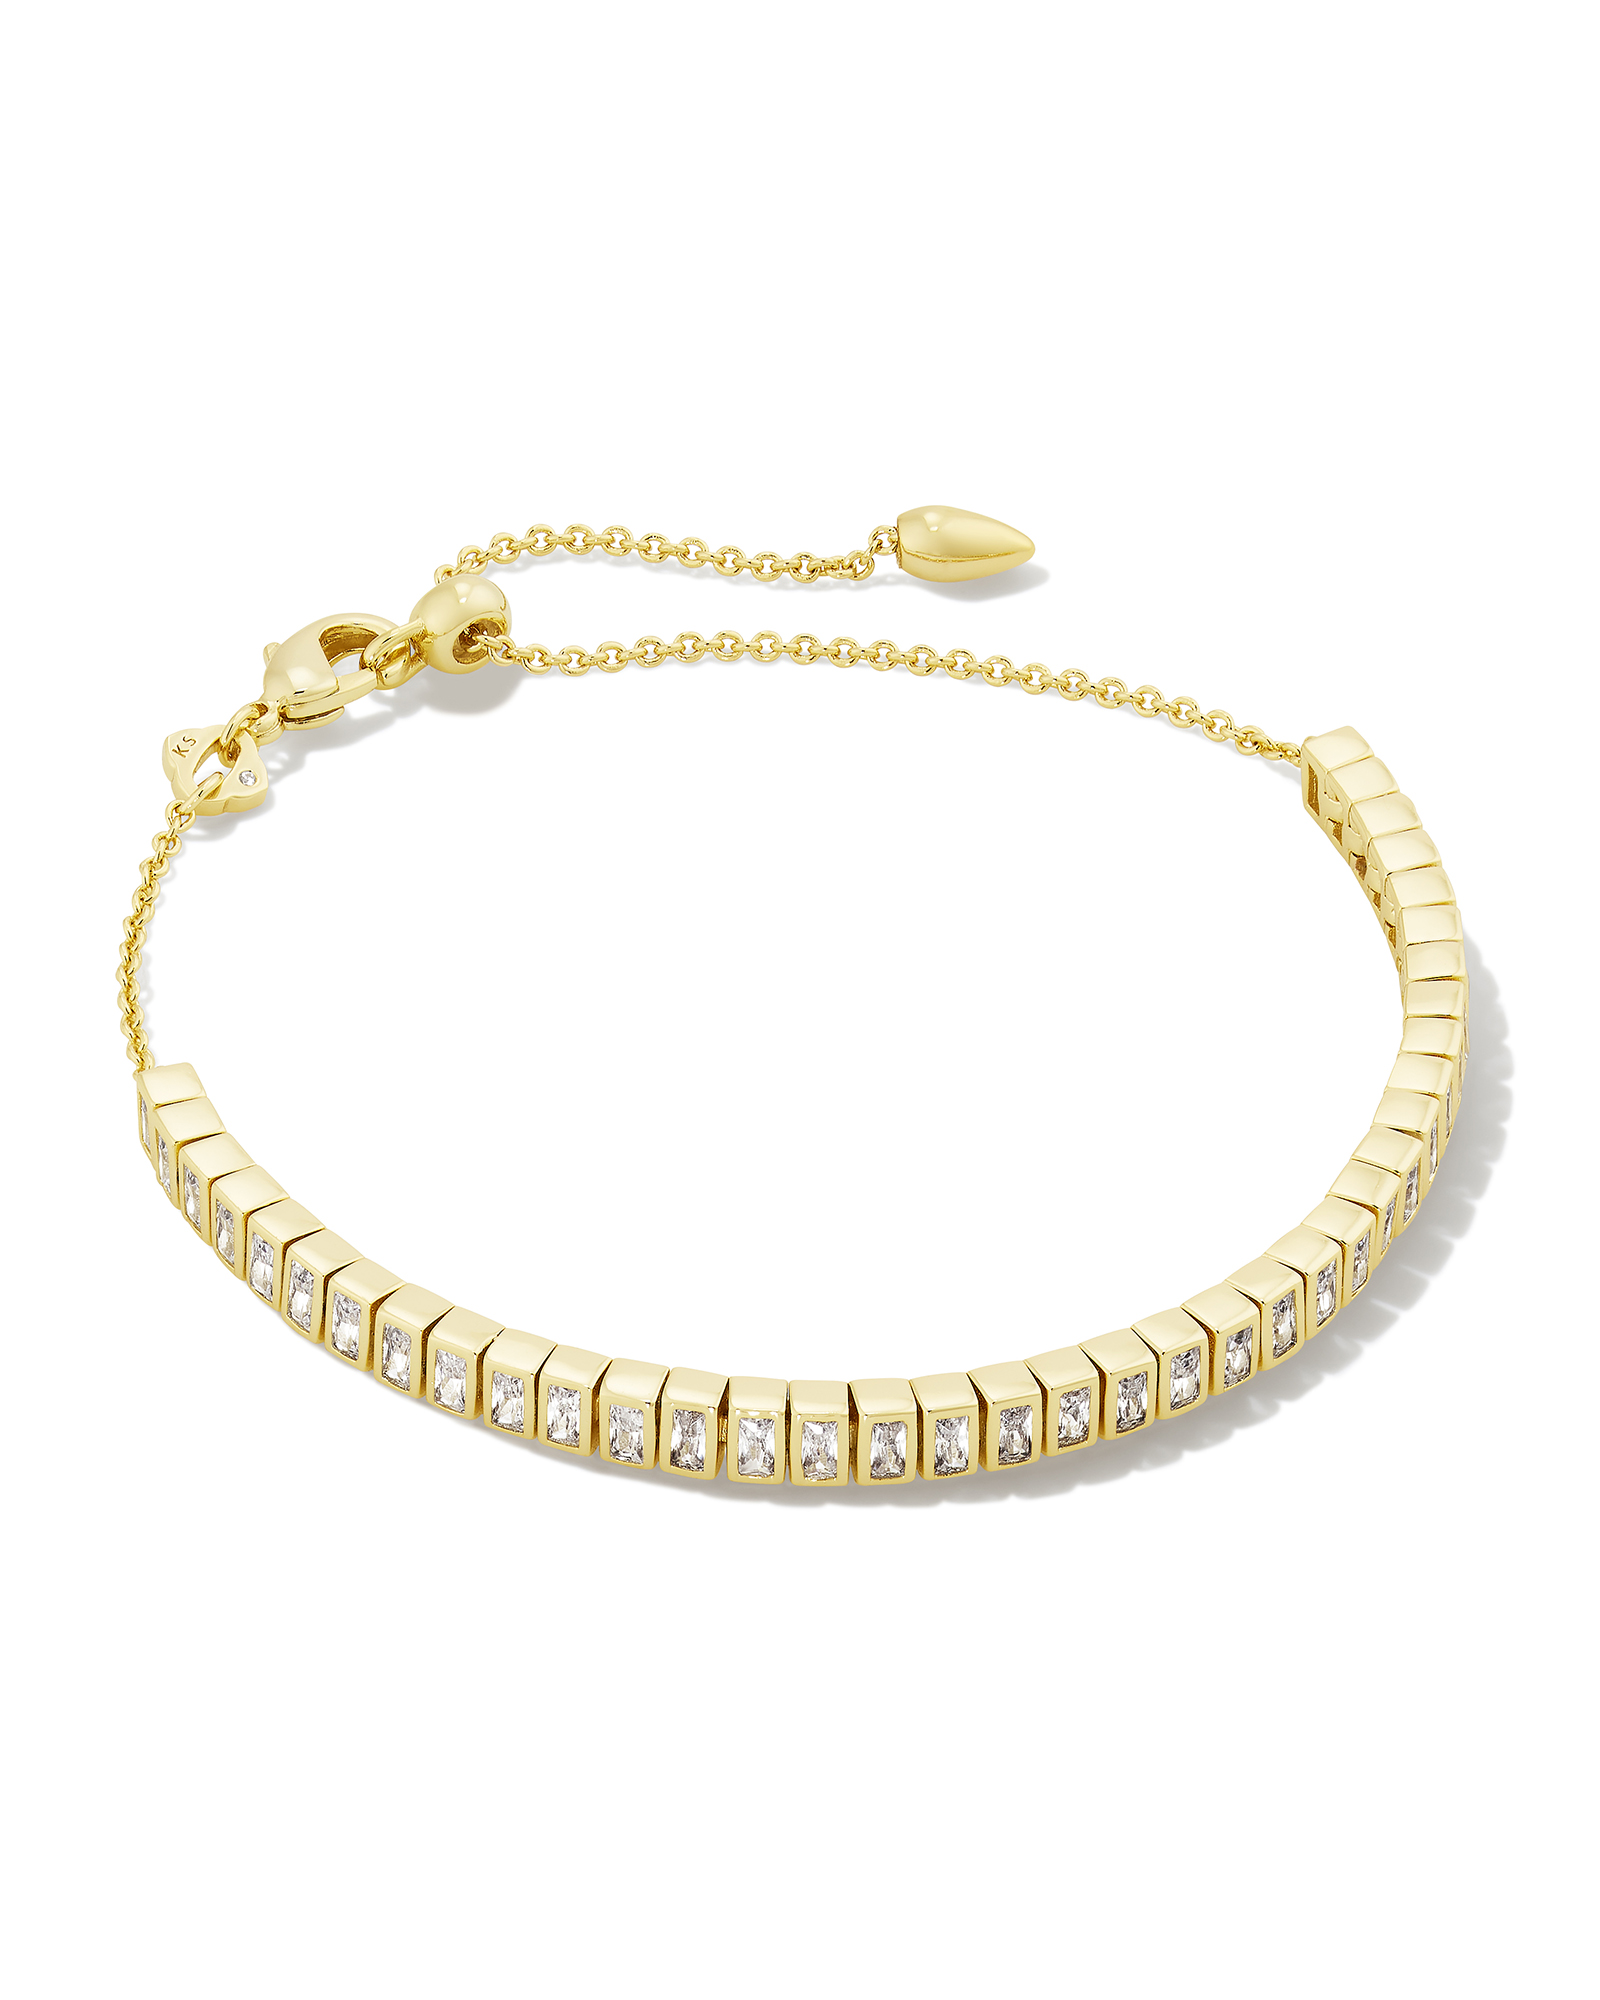 Gracie Gold Tennis Delicate Chain Bracelet in White Crystal | Kendra Scott